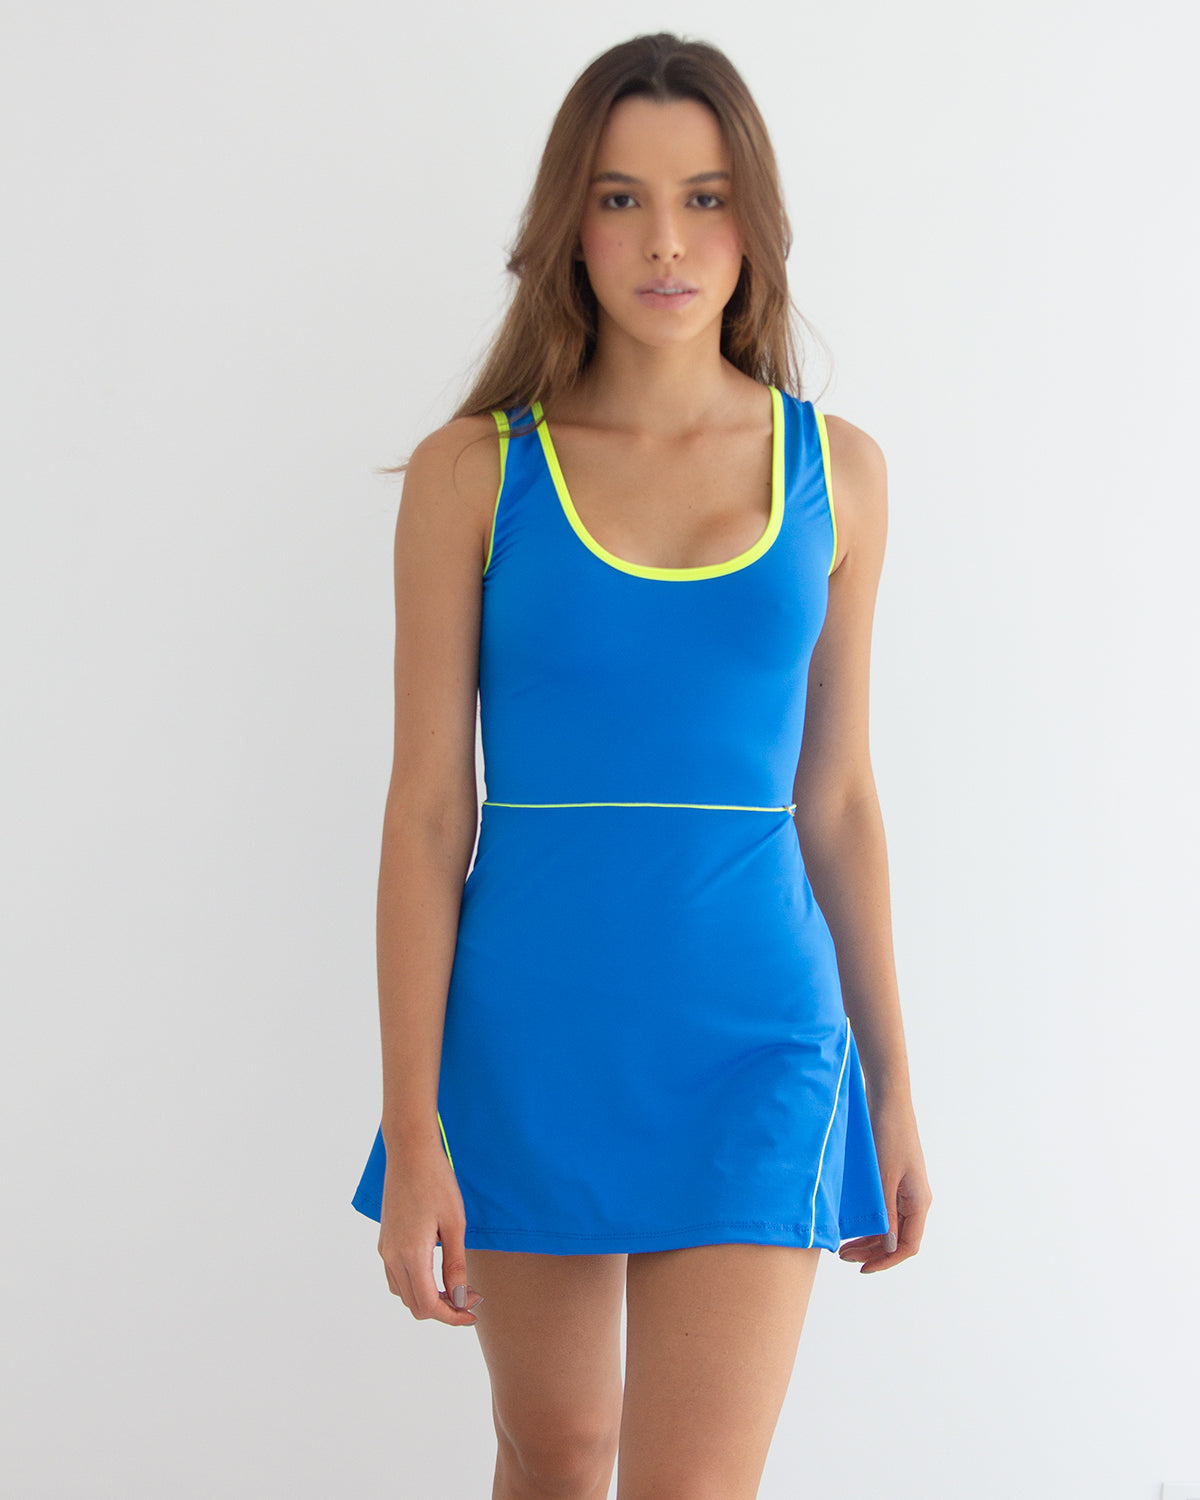 Odette Tennis Dress Royal Blue & Neon